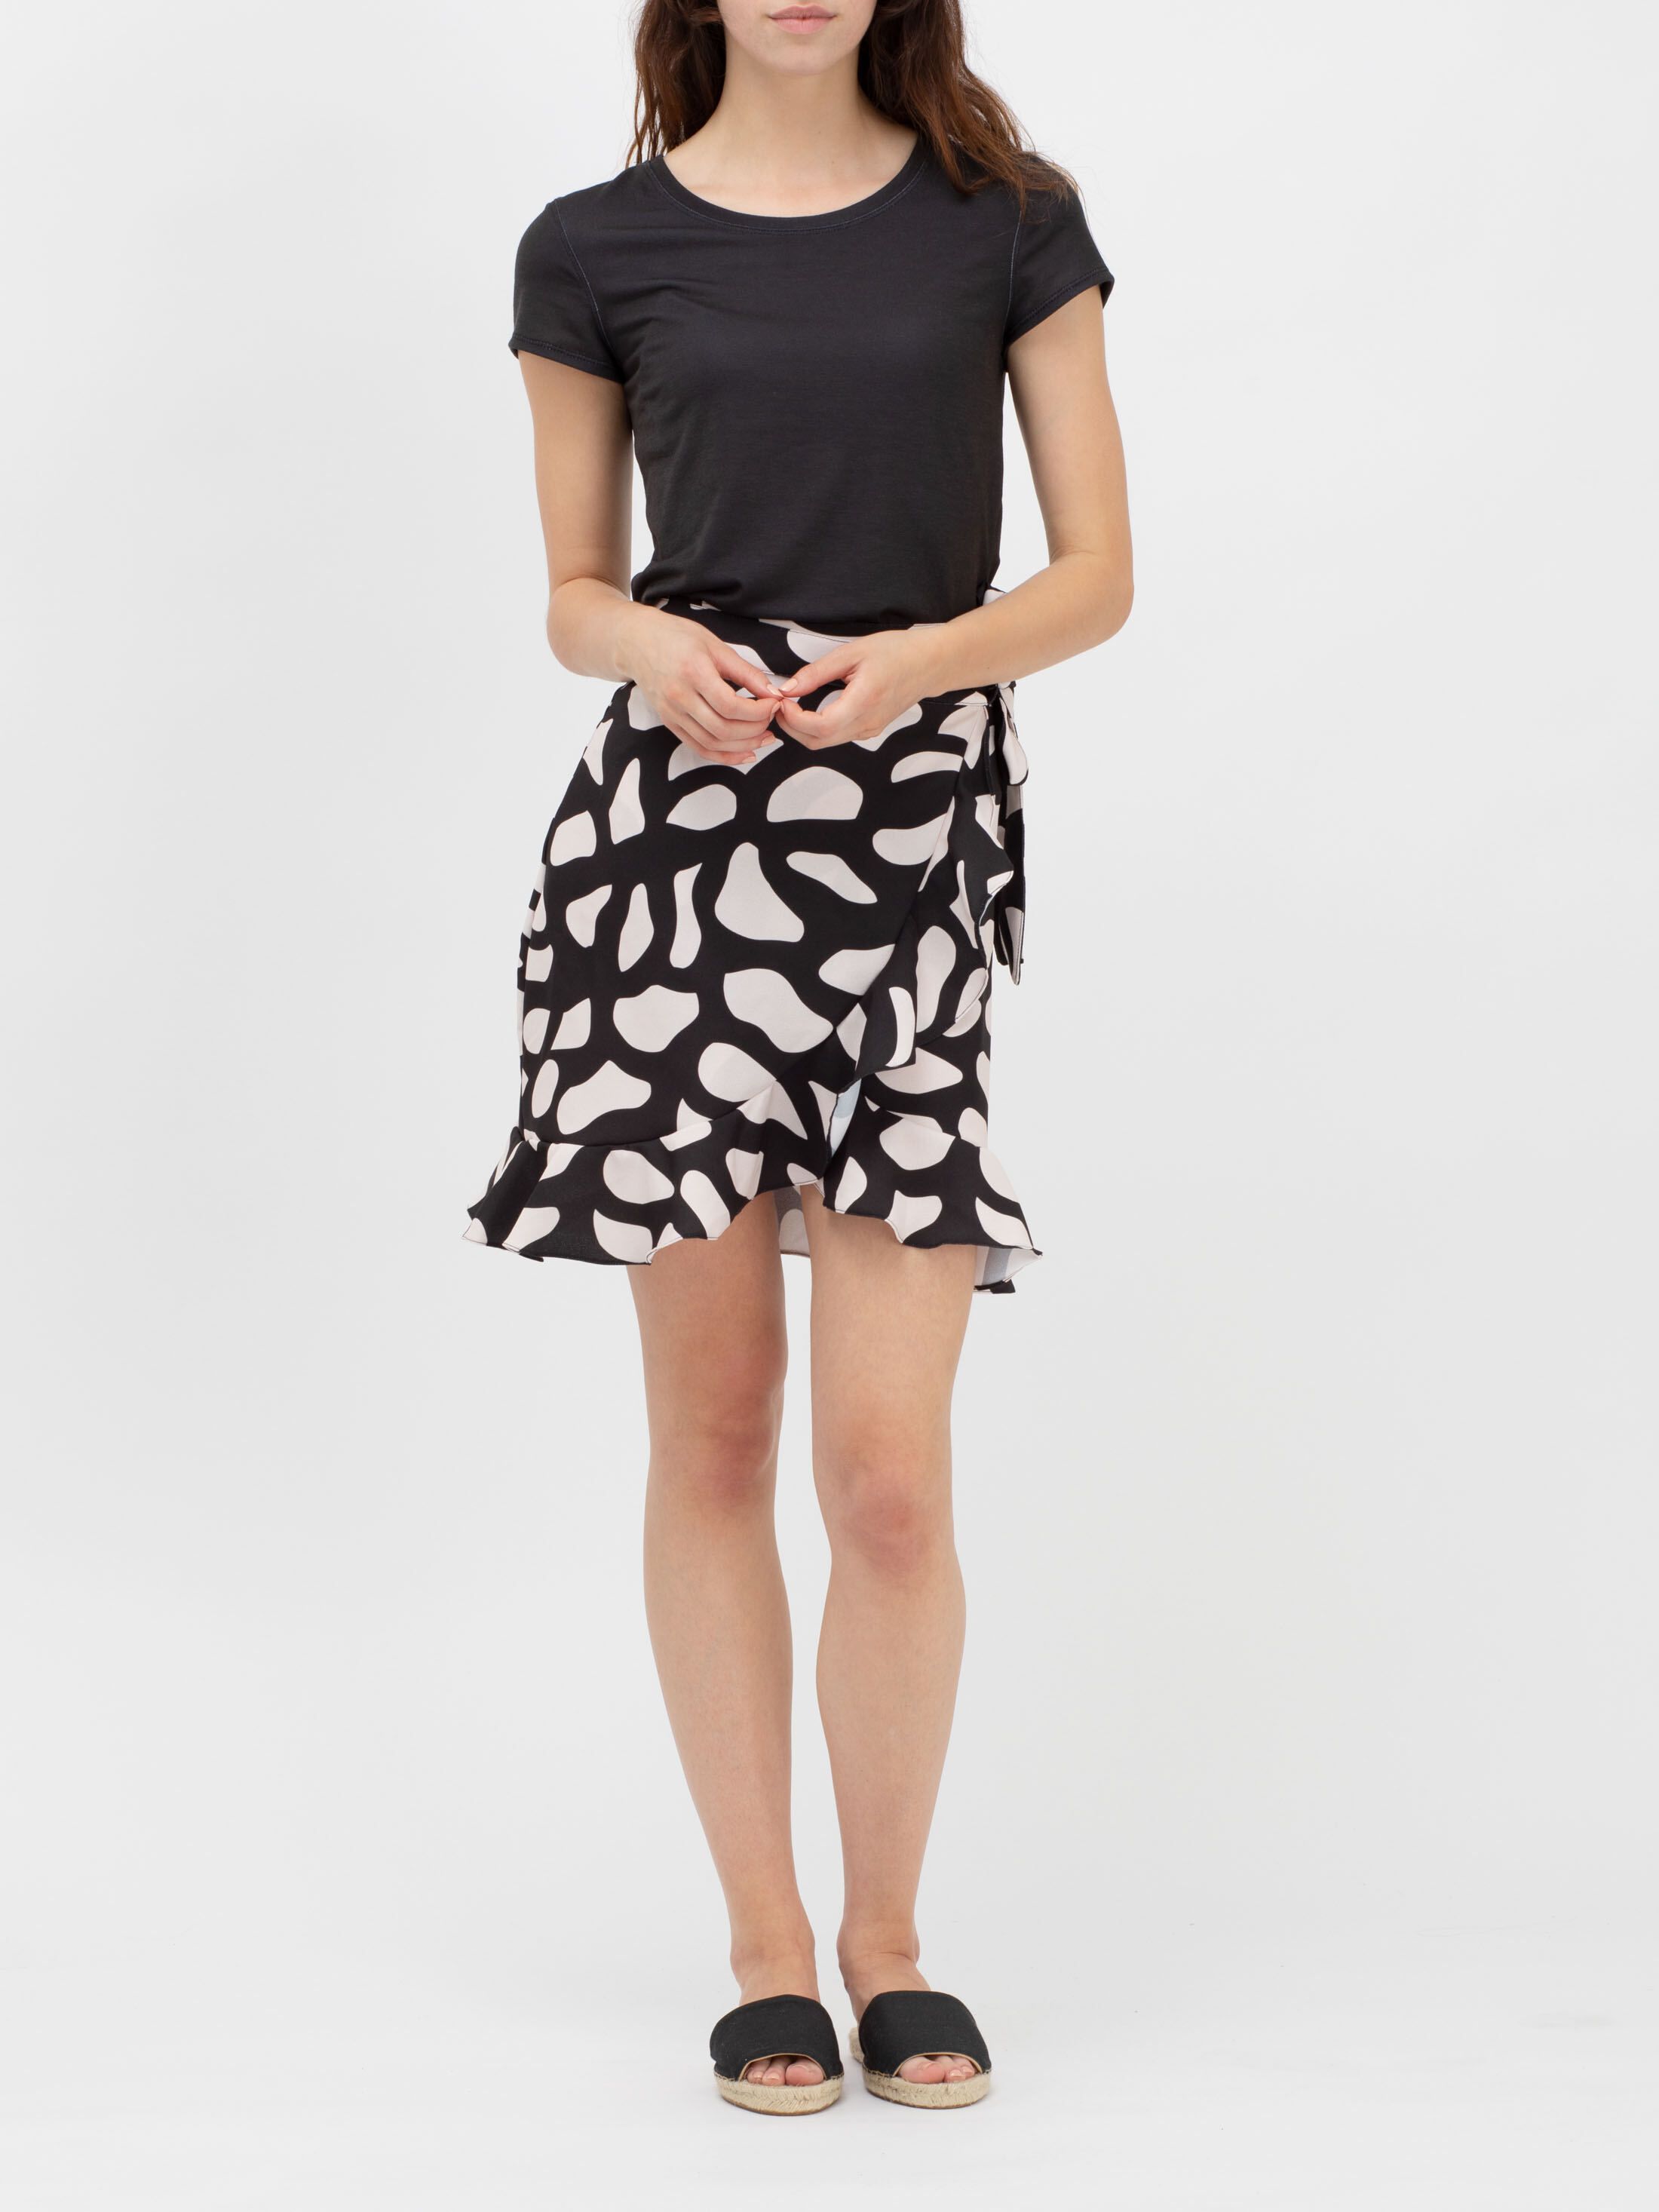 custom printed skirt with flounce hem